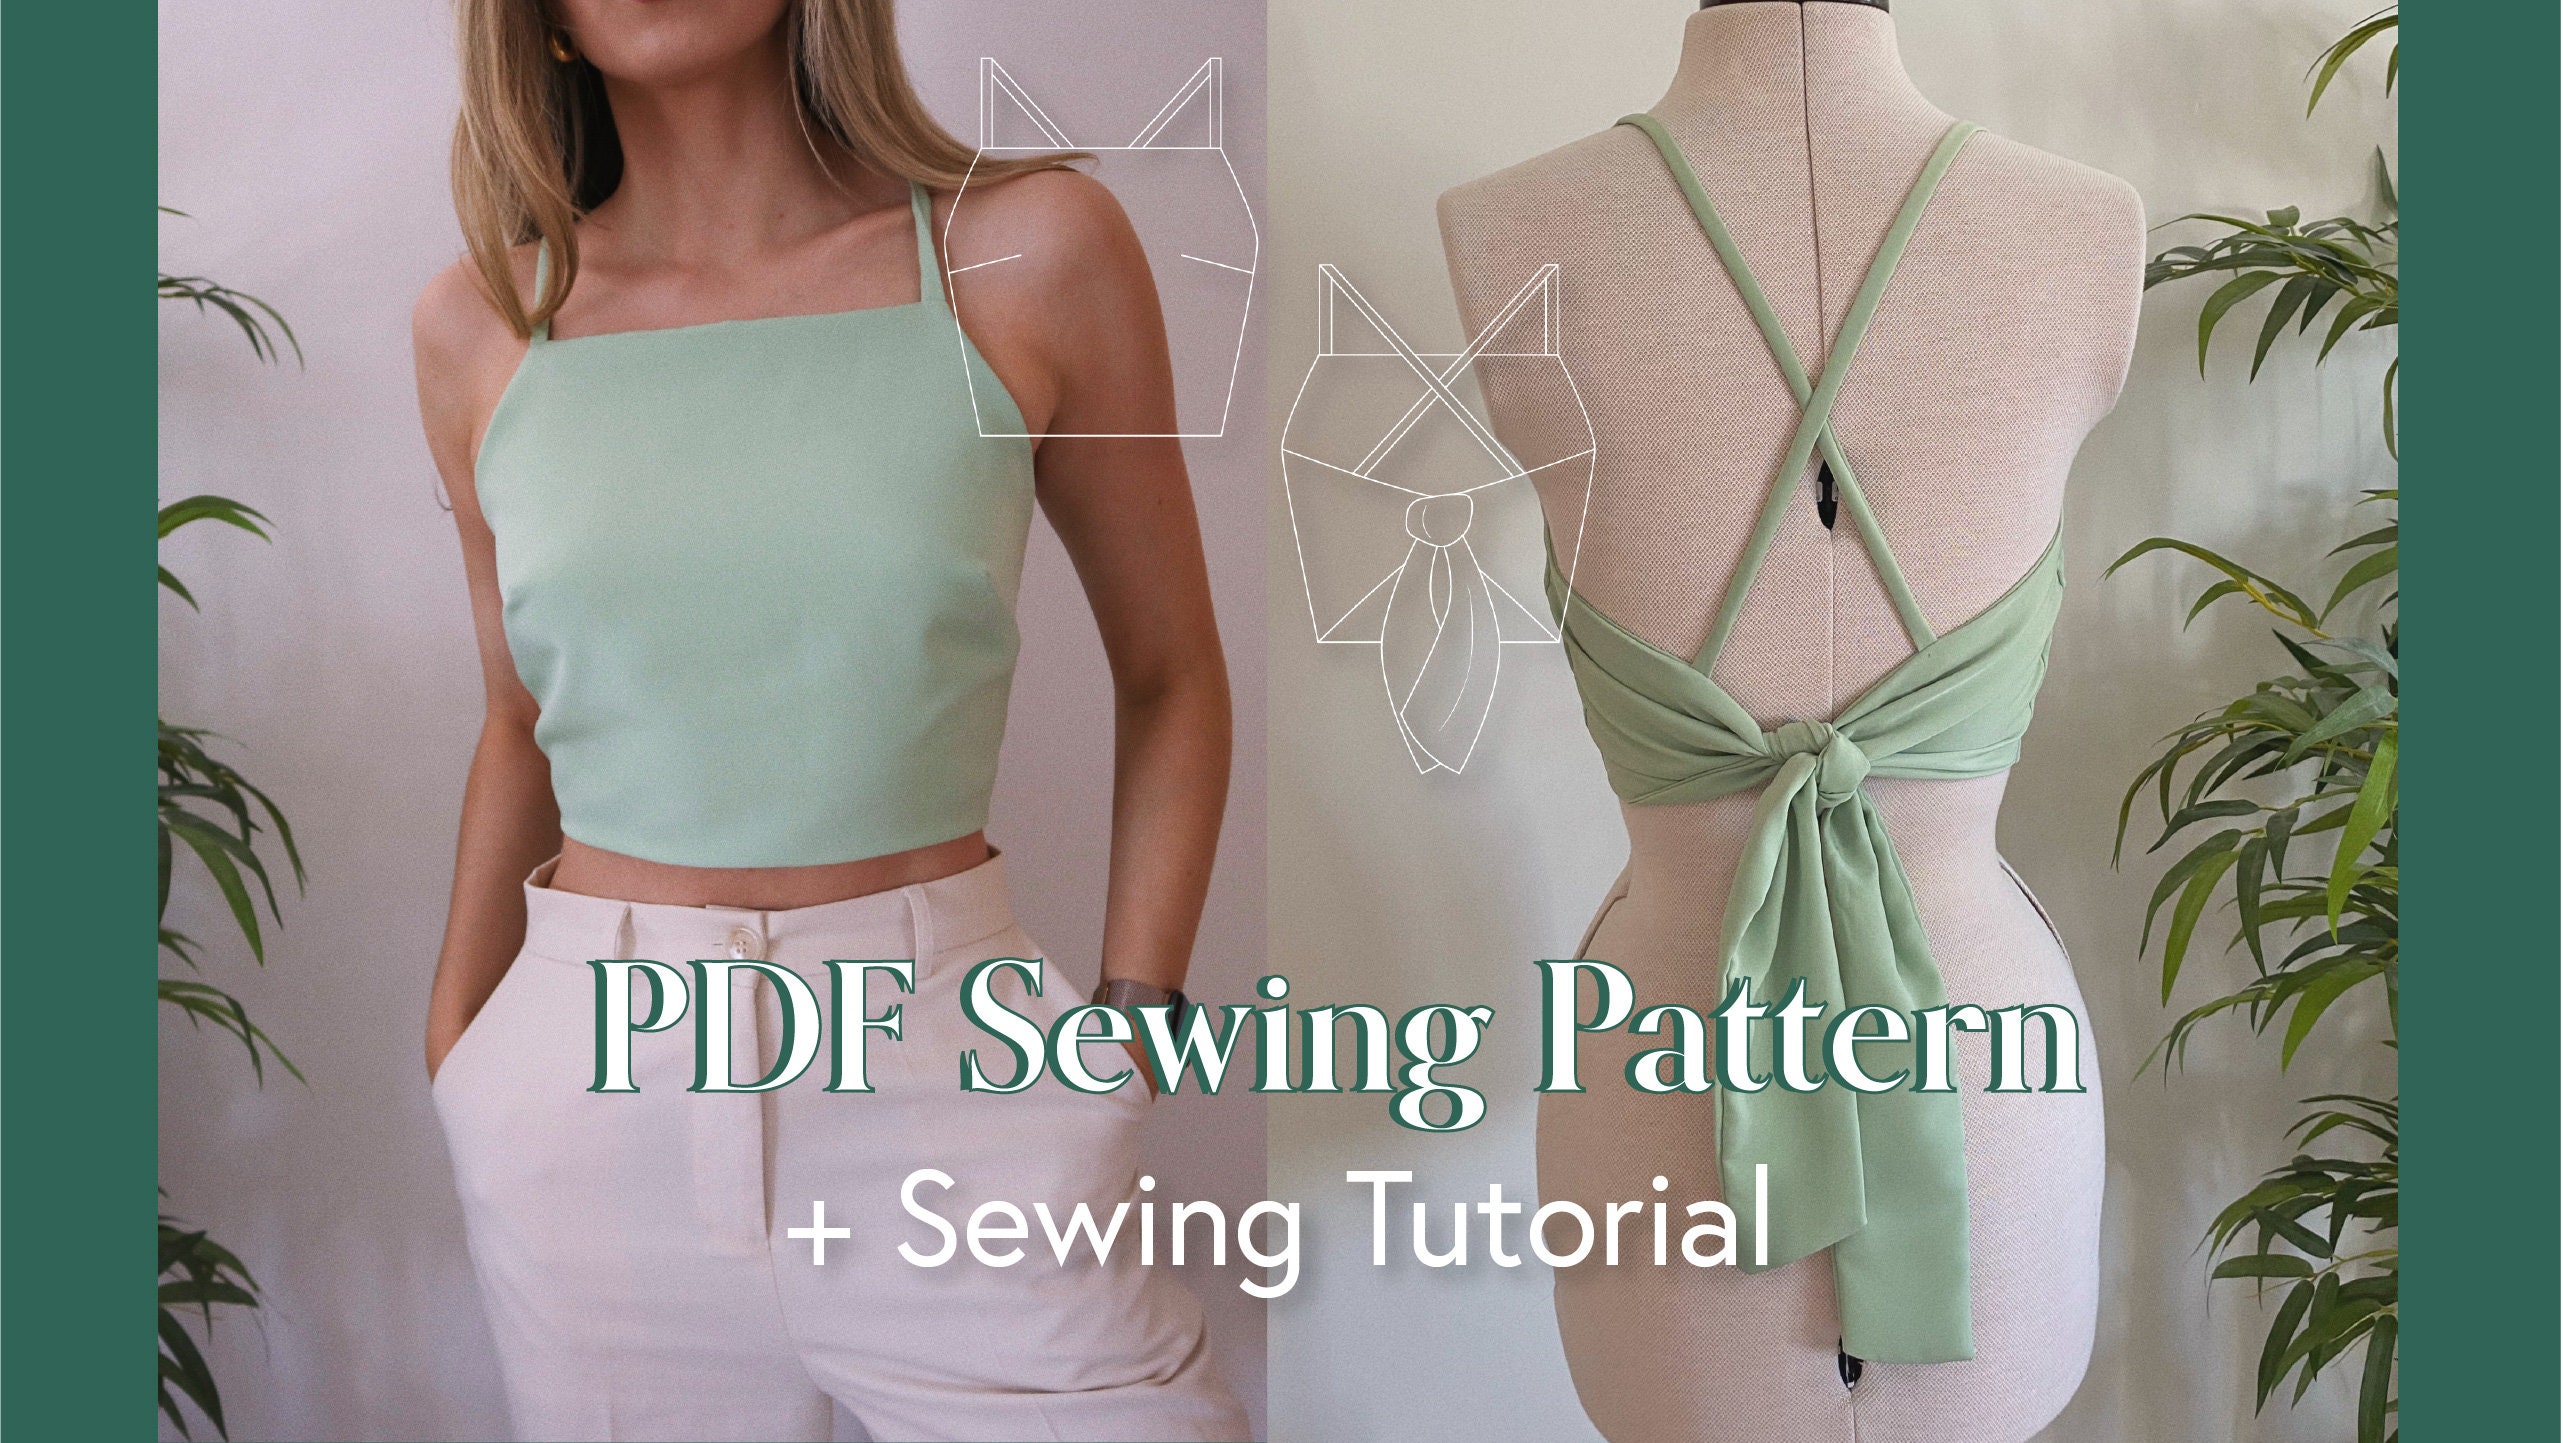 Girls Crop Top Sewing Pattern Custom Crop Top Halter Top Sewing Pattern  Beginner Sewing Pattern Xs-xl / Us-letter / A0 / A4 PDF File 